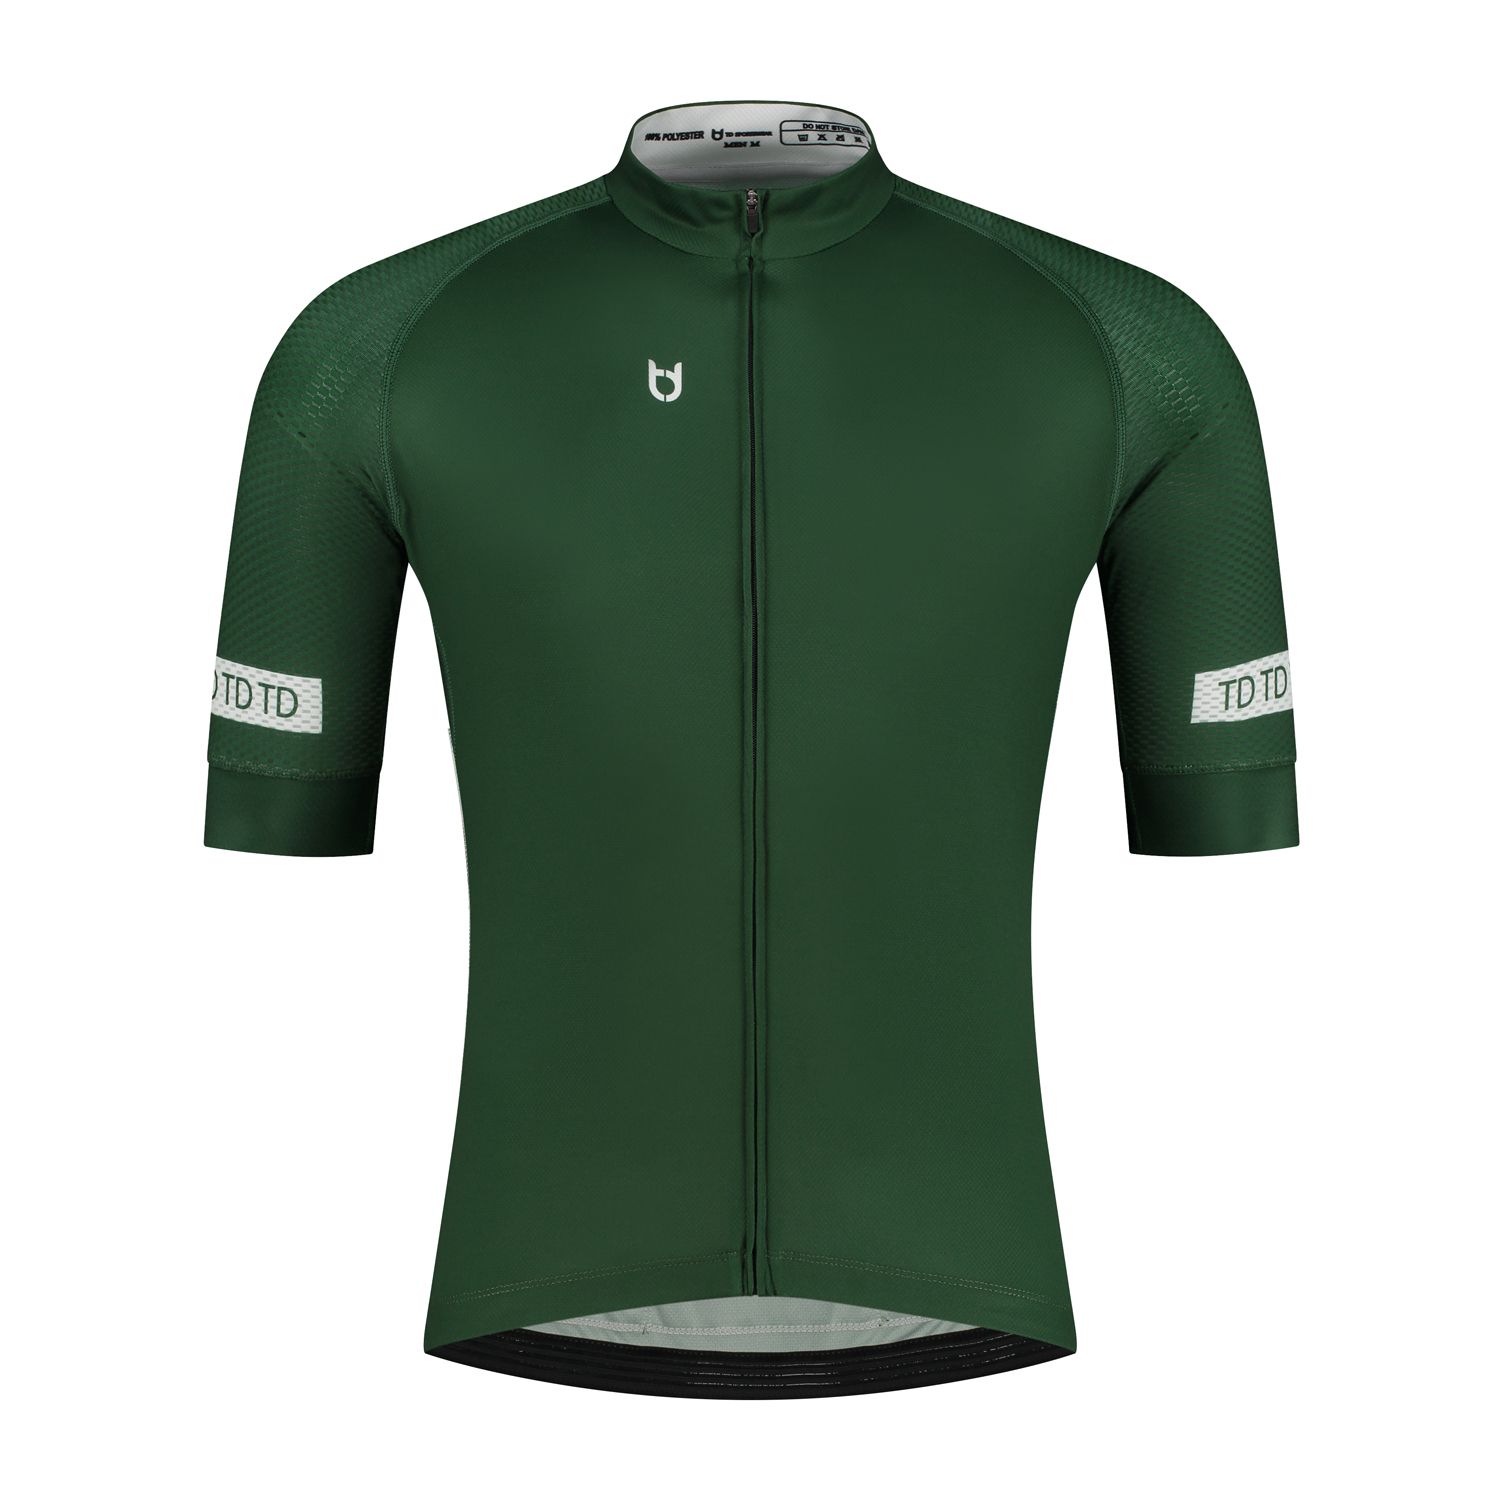 front green cycling jersey men sizing short sleeves shirt TD